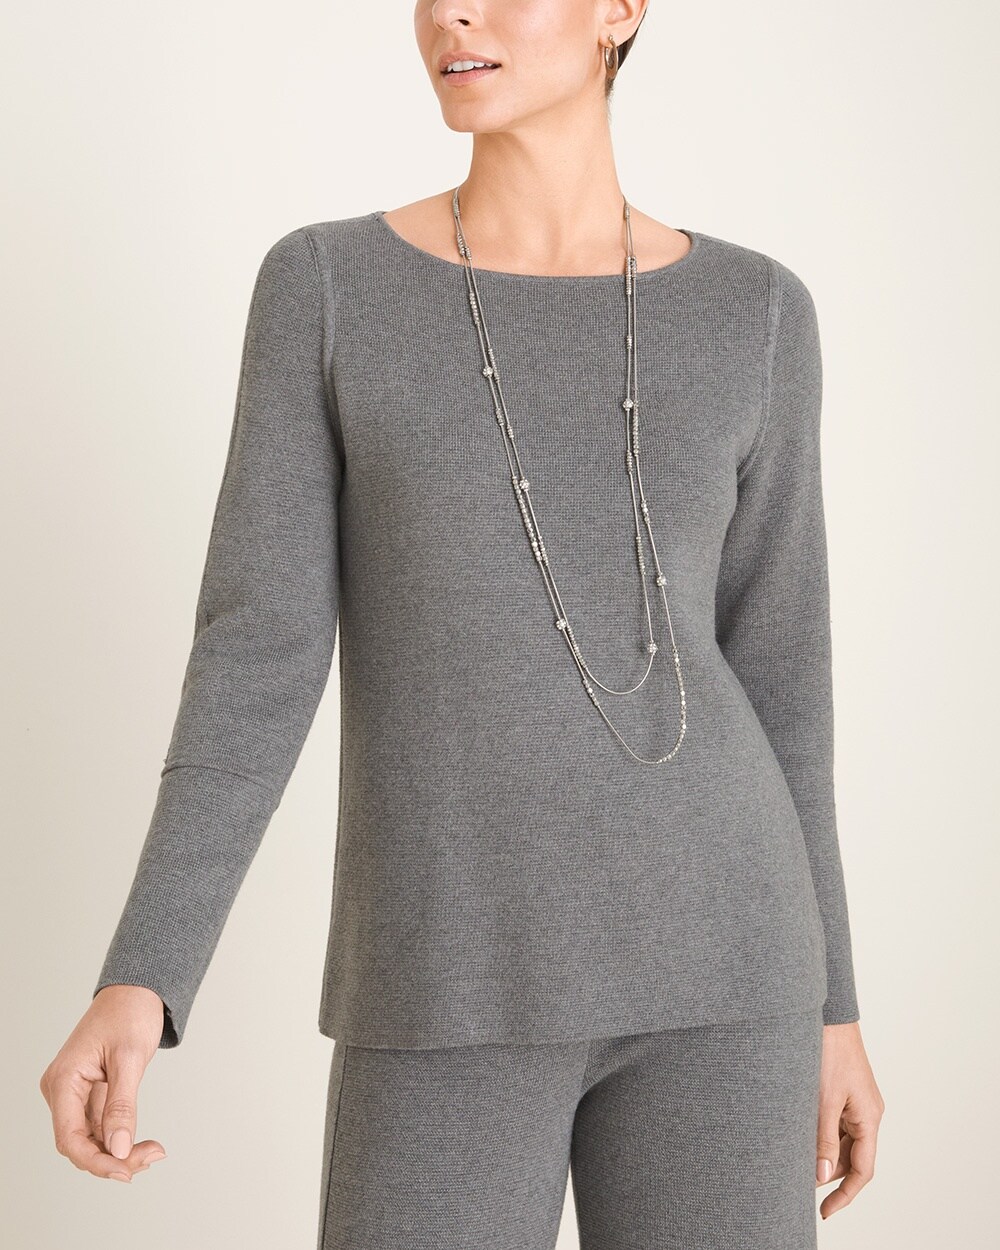 Zenergy Cotton-Cashmere Blend Gray Milano-Trim Sweater